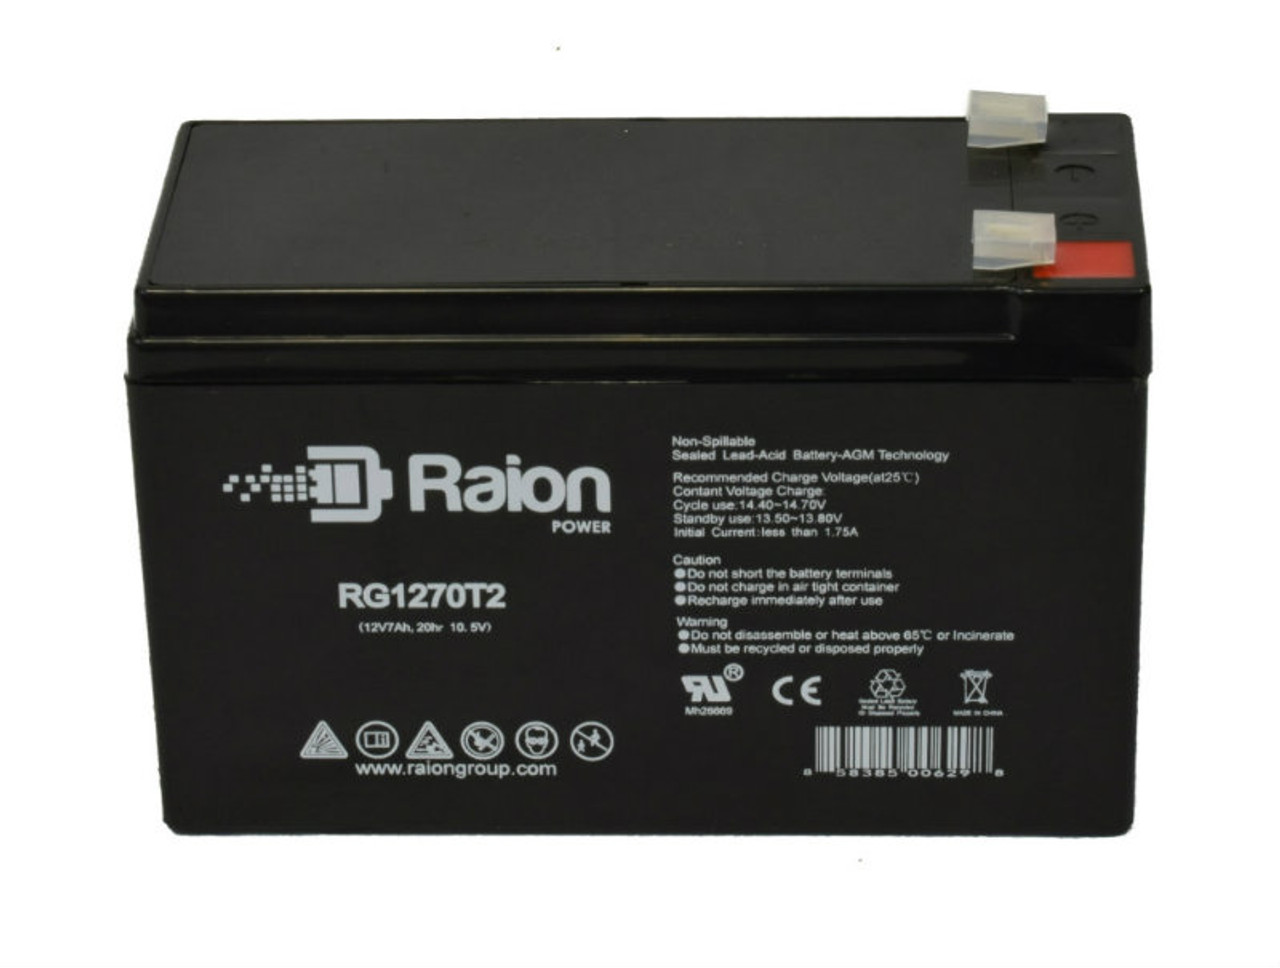 Raion Power RG1270T1 12V 7Ah Lead Acid Battery for Sealake FM1270